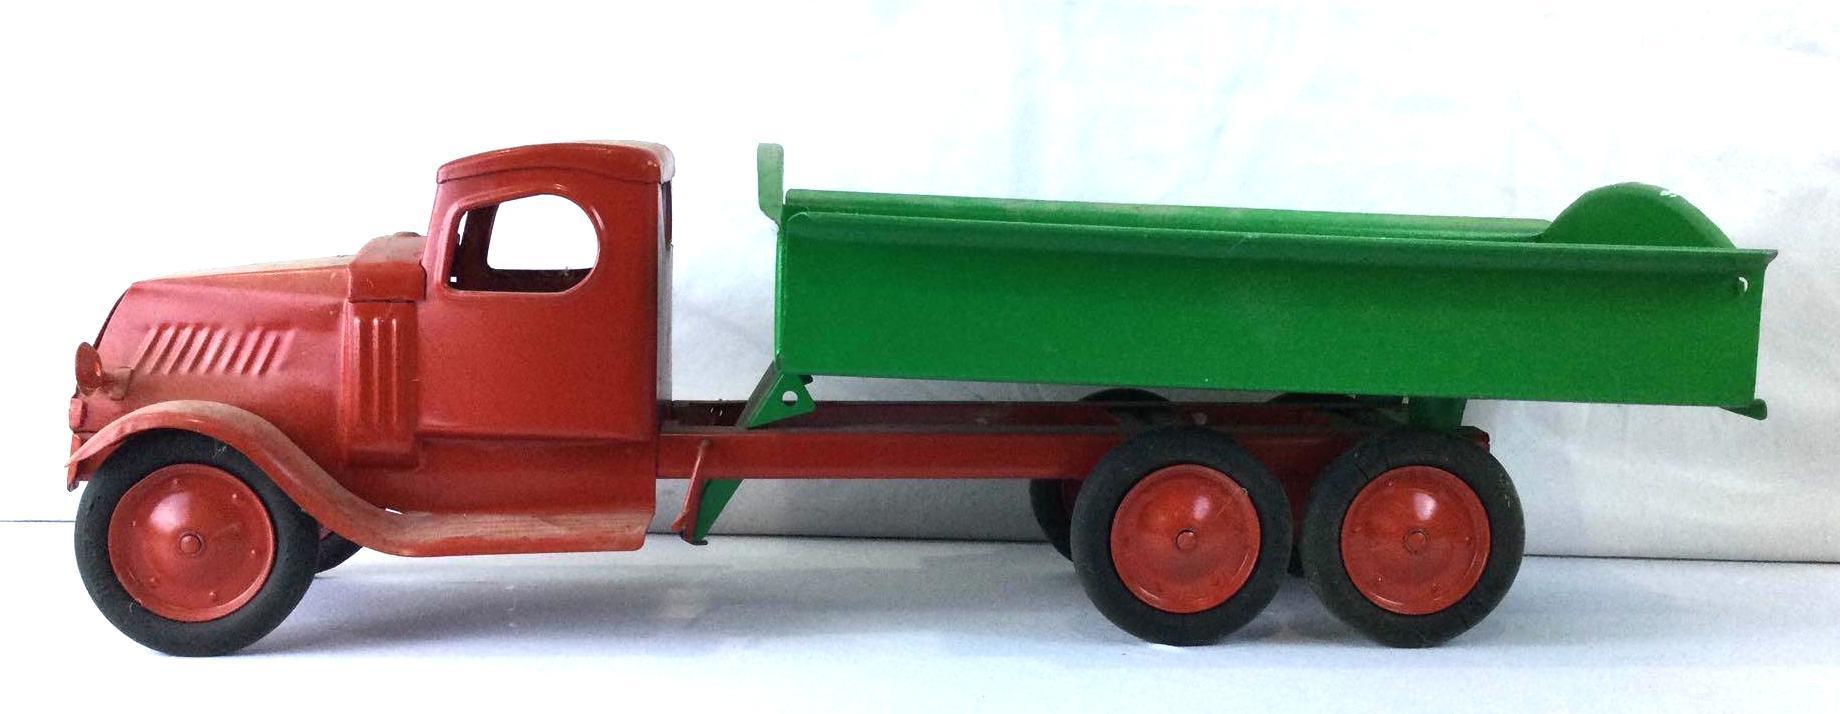 Turner Toys Painted Pressed Steel Dump Truck